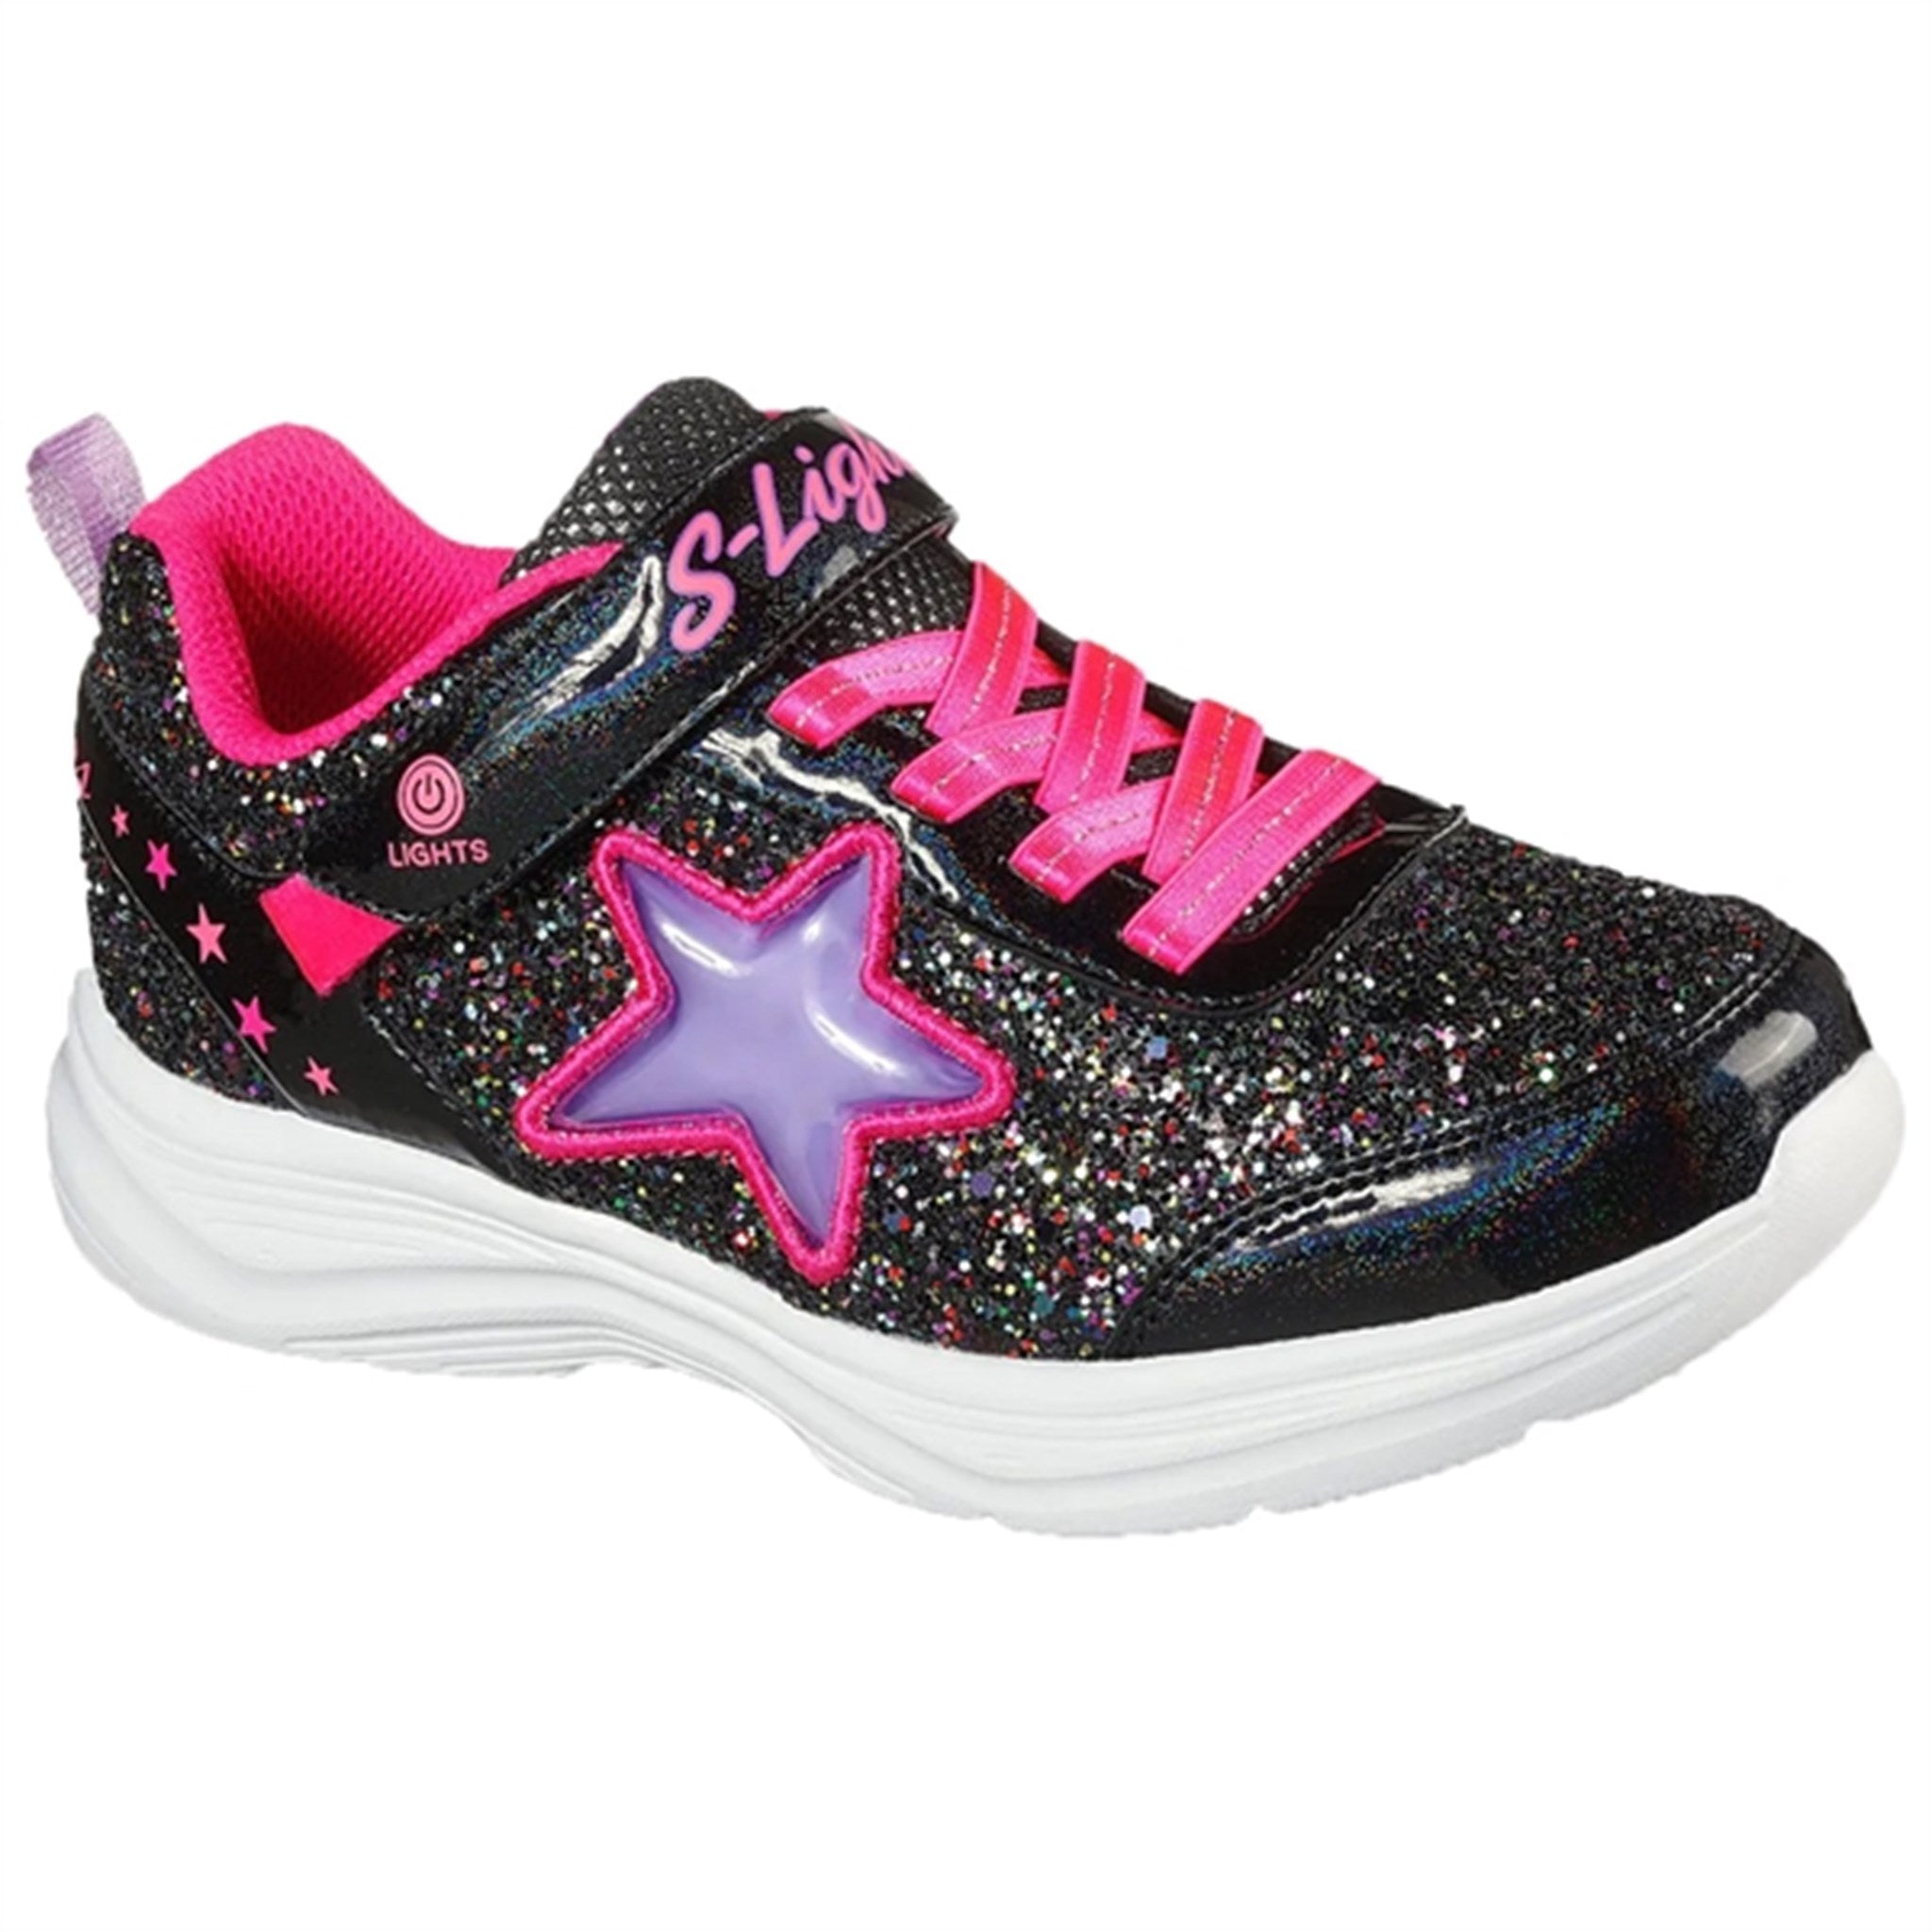 Skechers Glimmer Knicks Sneakers Starlet Shine Black Hot Pink